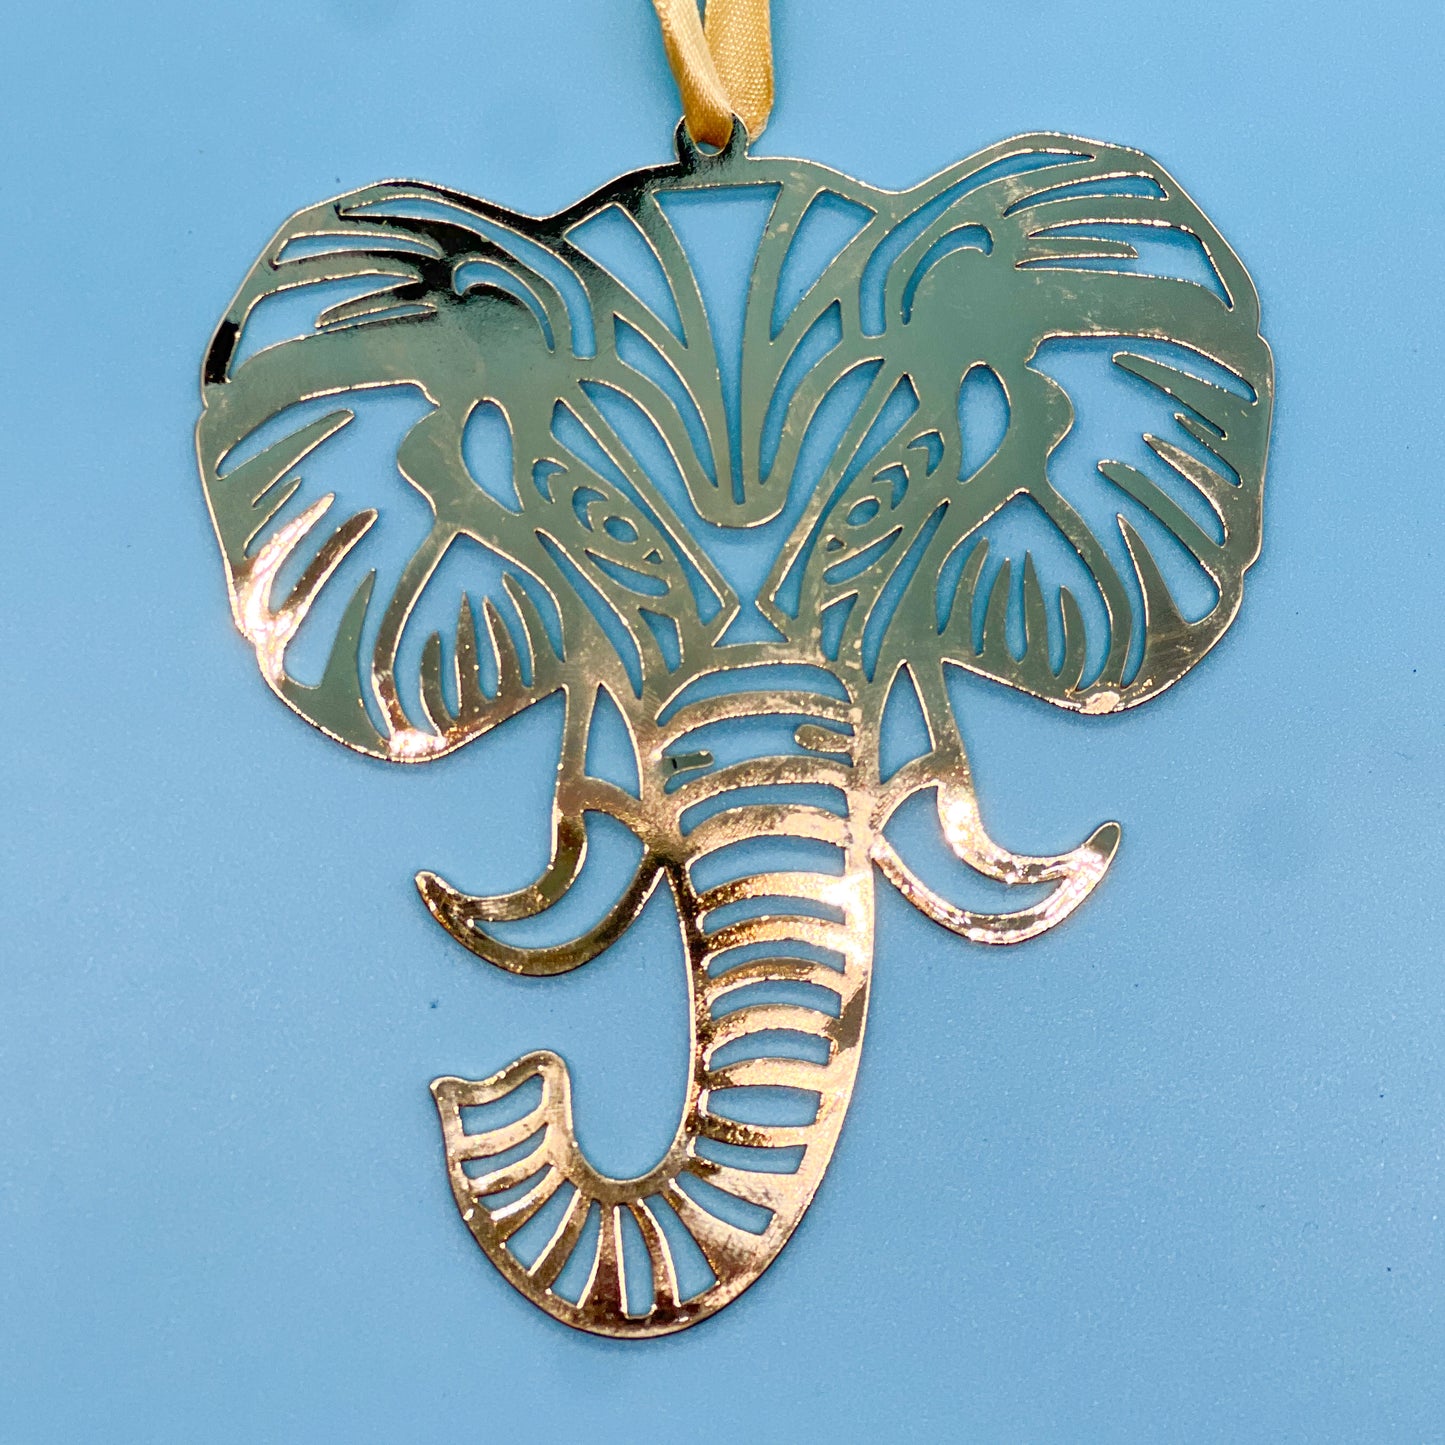 Gold Elephant Ornament